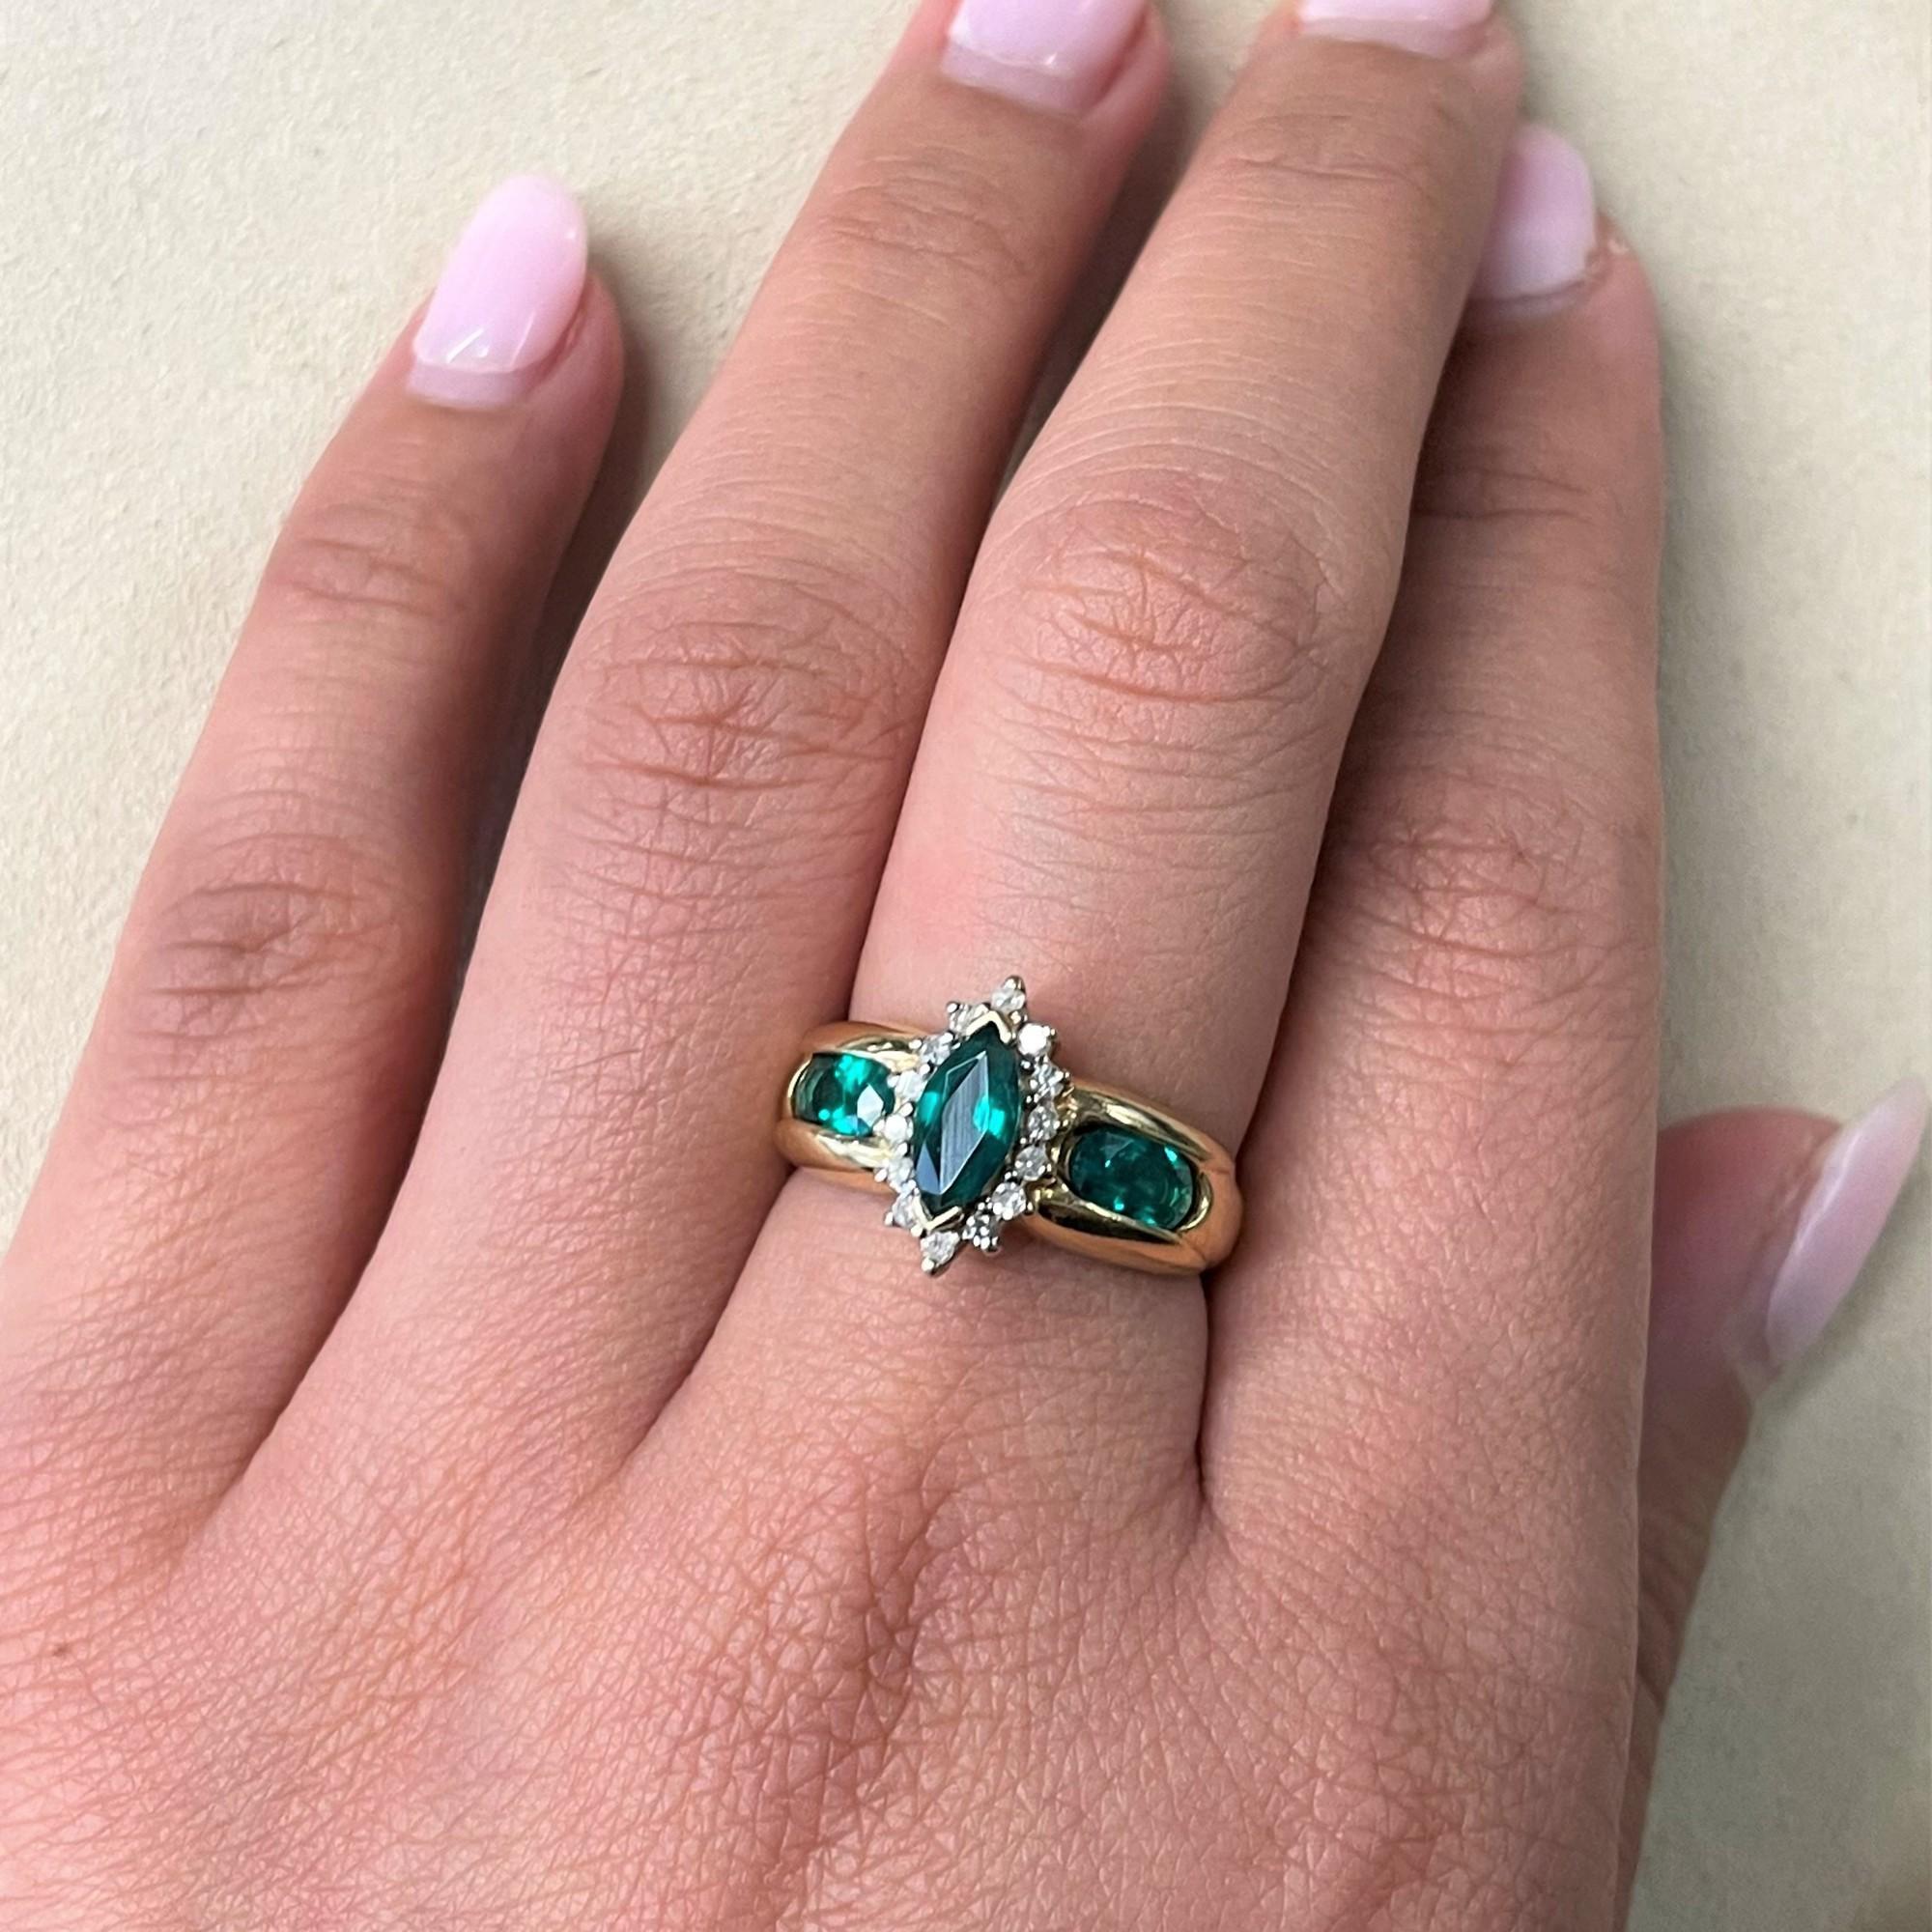 rachel green turquoise ring